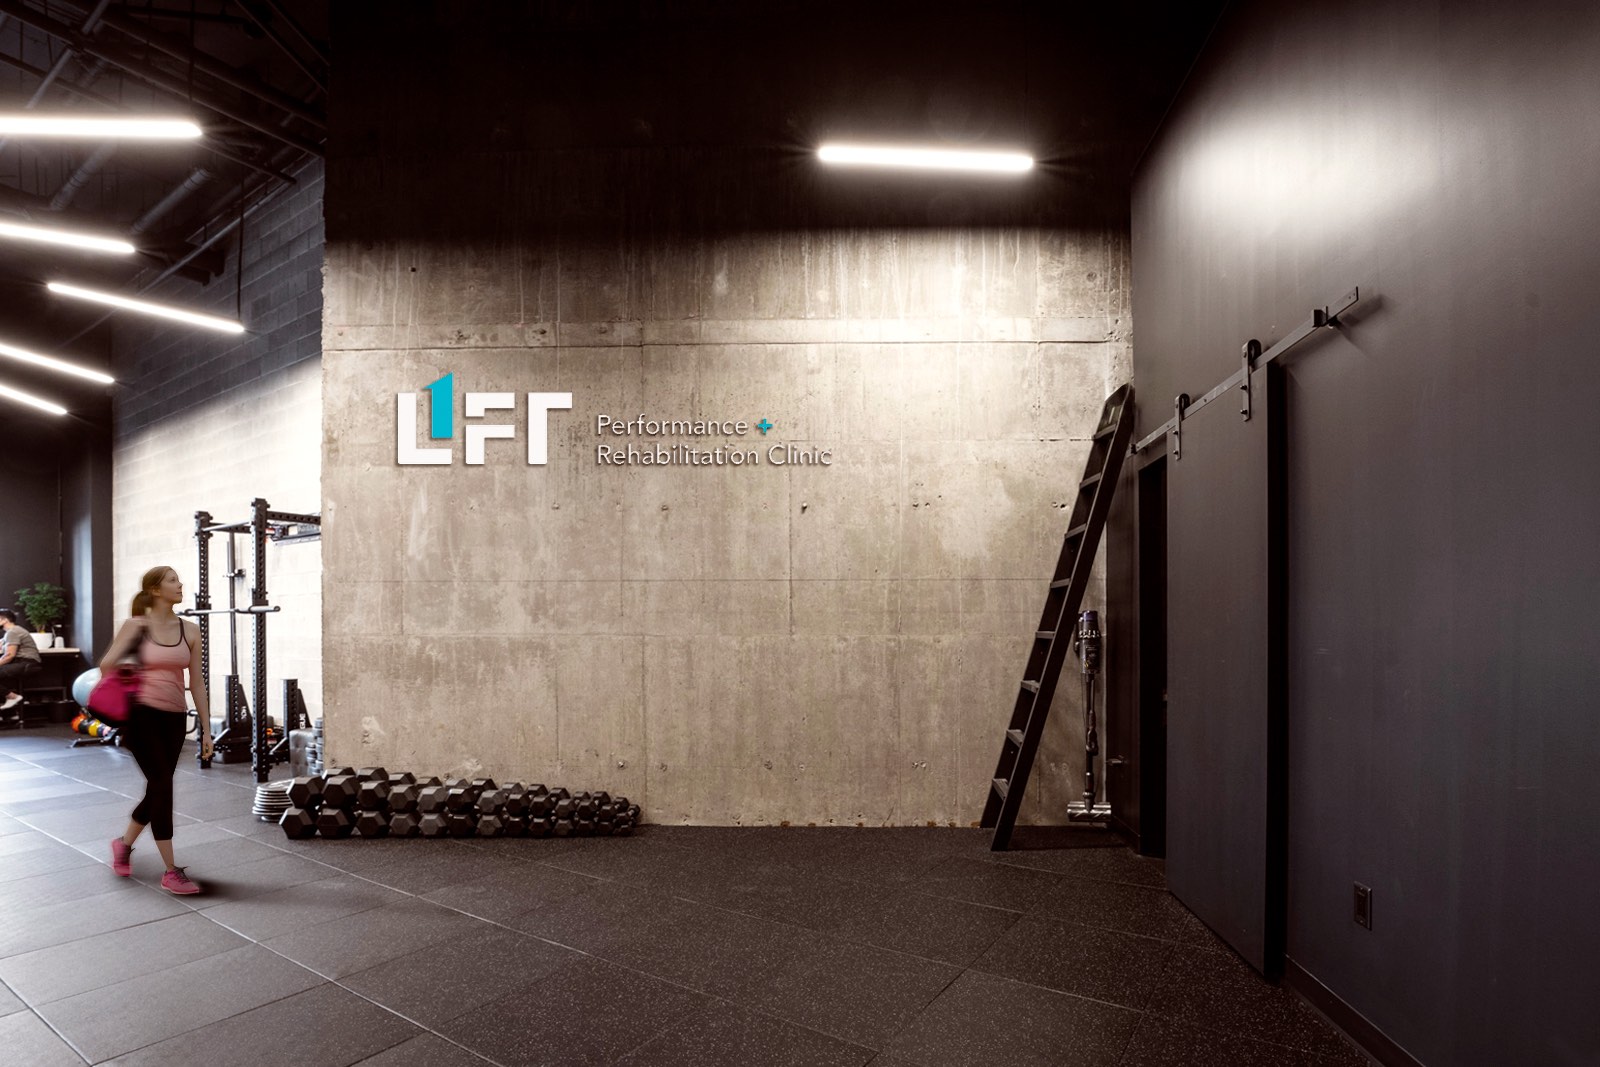 Lift Performance + Rehabilitation Clinic entry concrete wall + logo